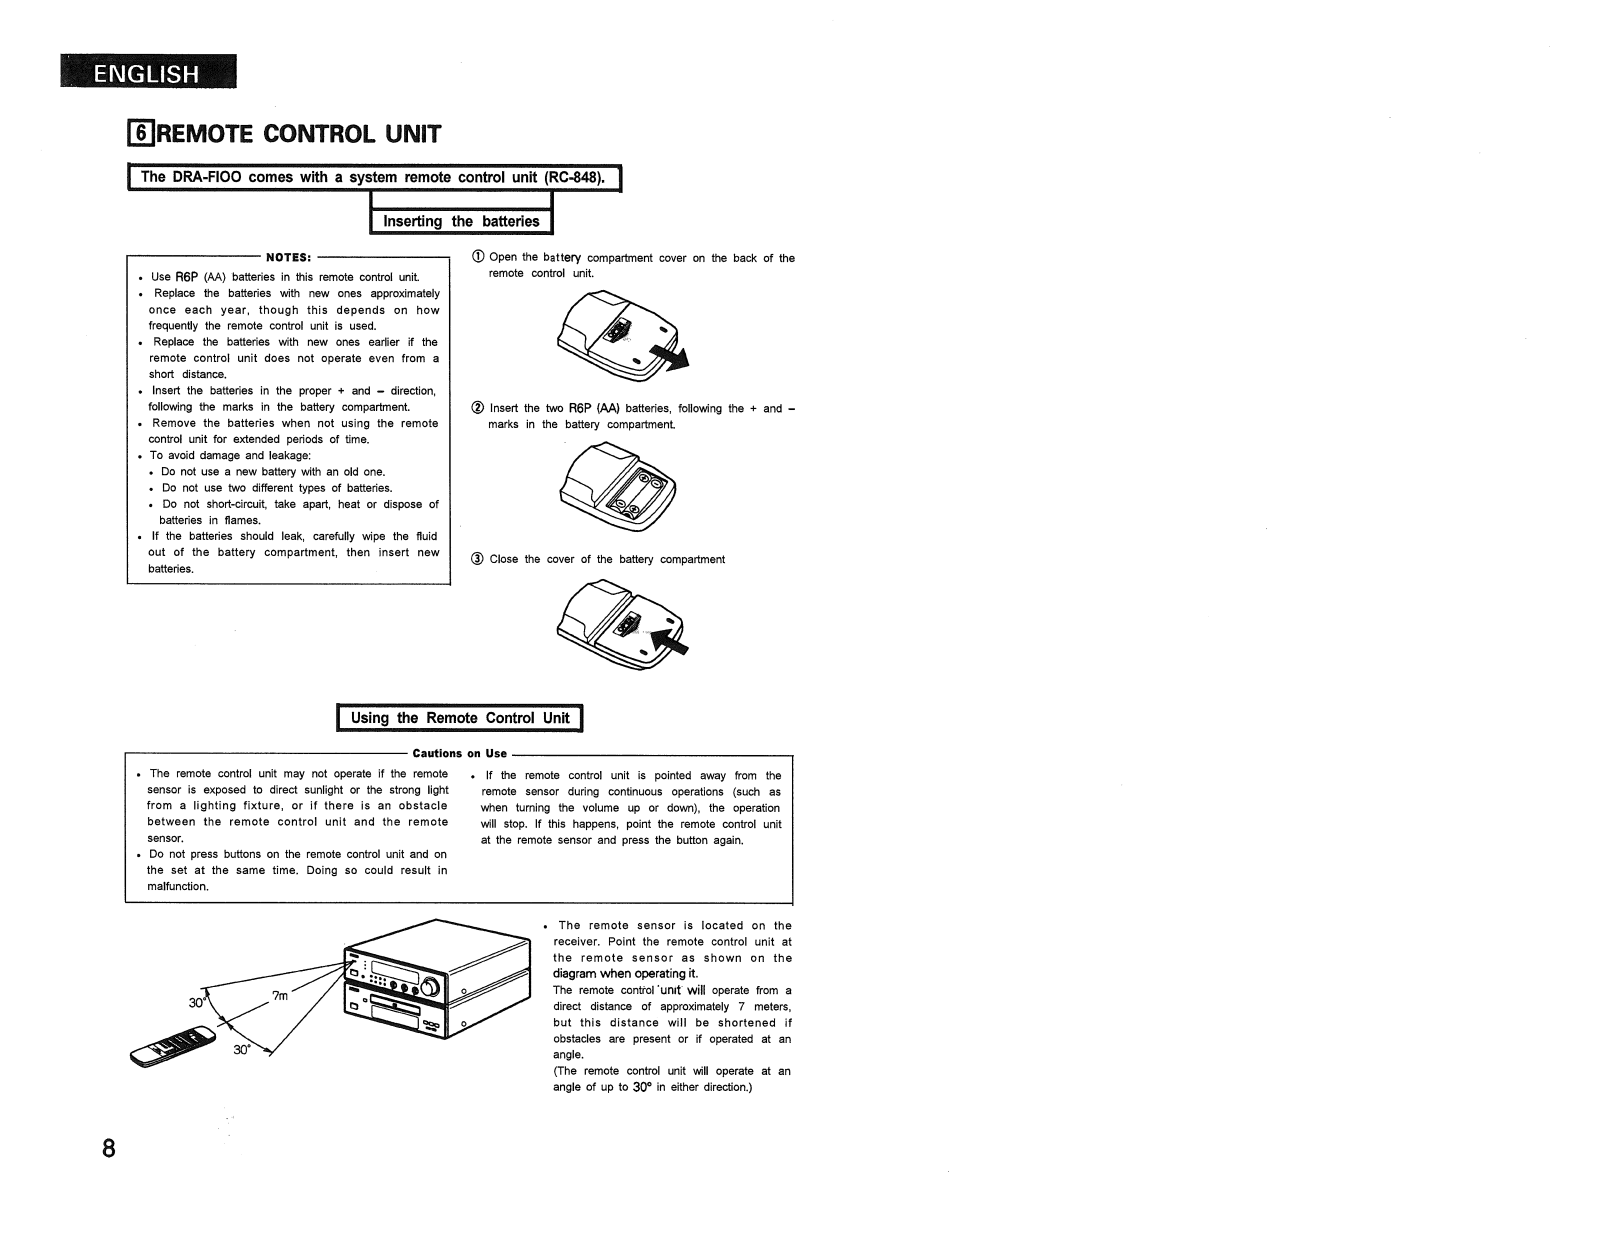 DENON RC-848 User Manual